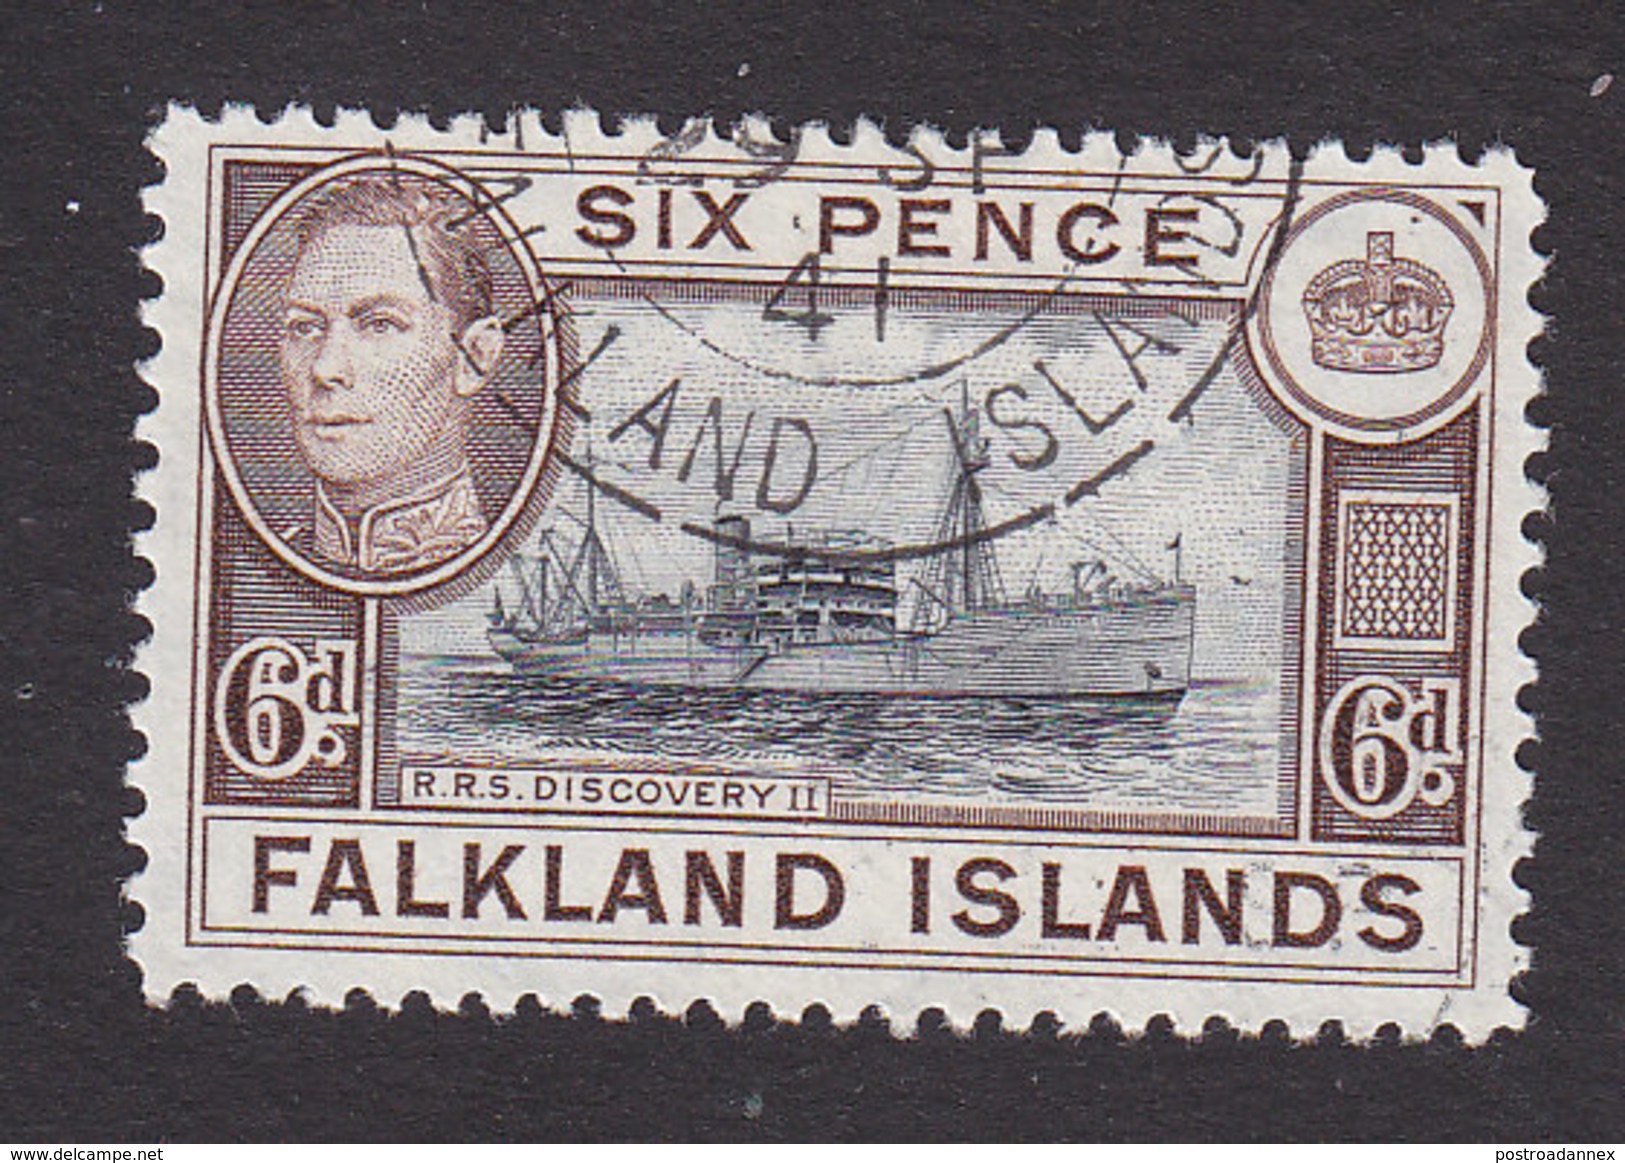 Falkland Islands, Scott #89, Used, George VI And Scenes Of Falkland Islands, Issued 1938 - Falkland Islands